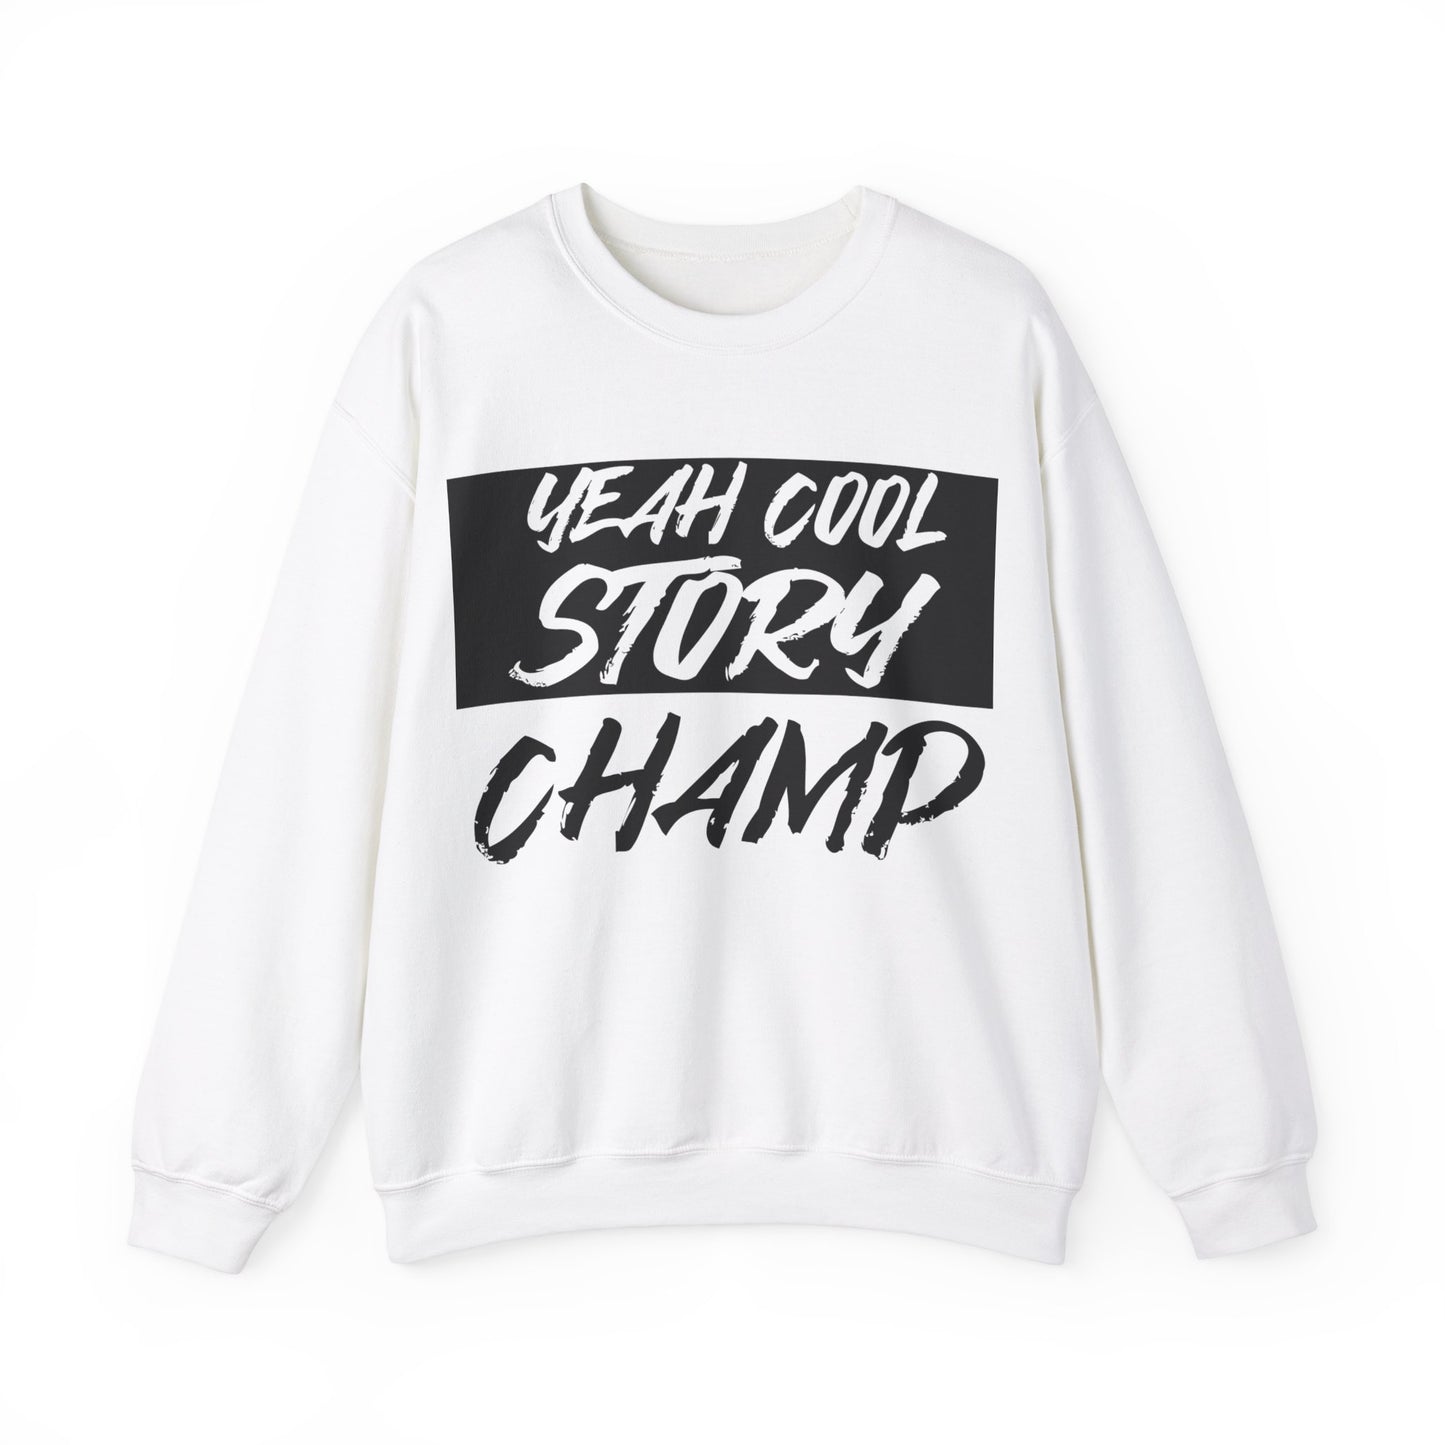 YEAH COOL STORY CHAMP - Crewneck Sweatshirt